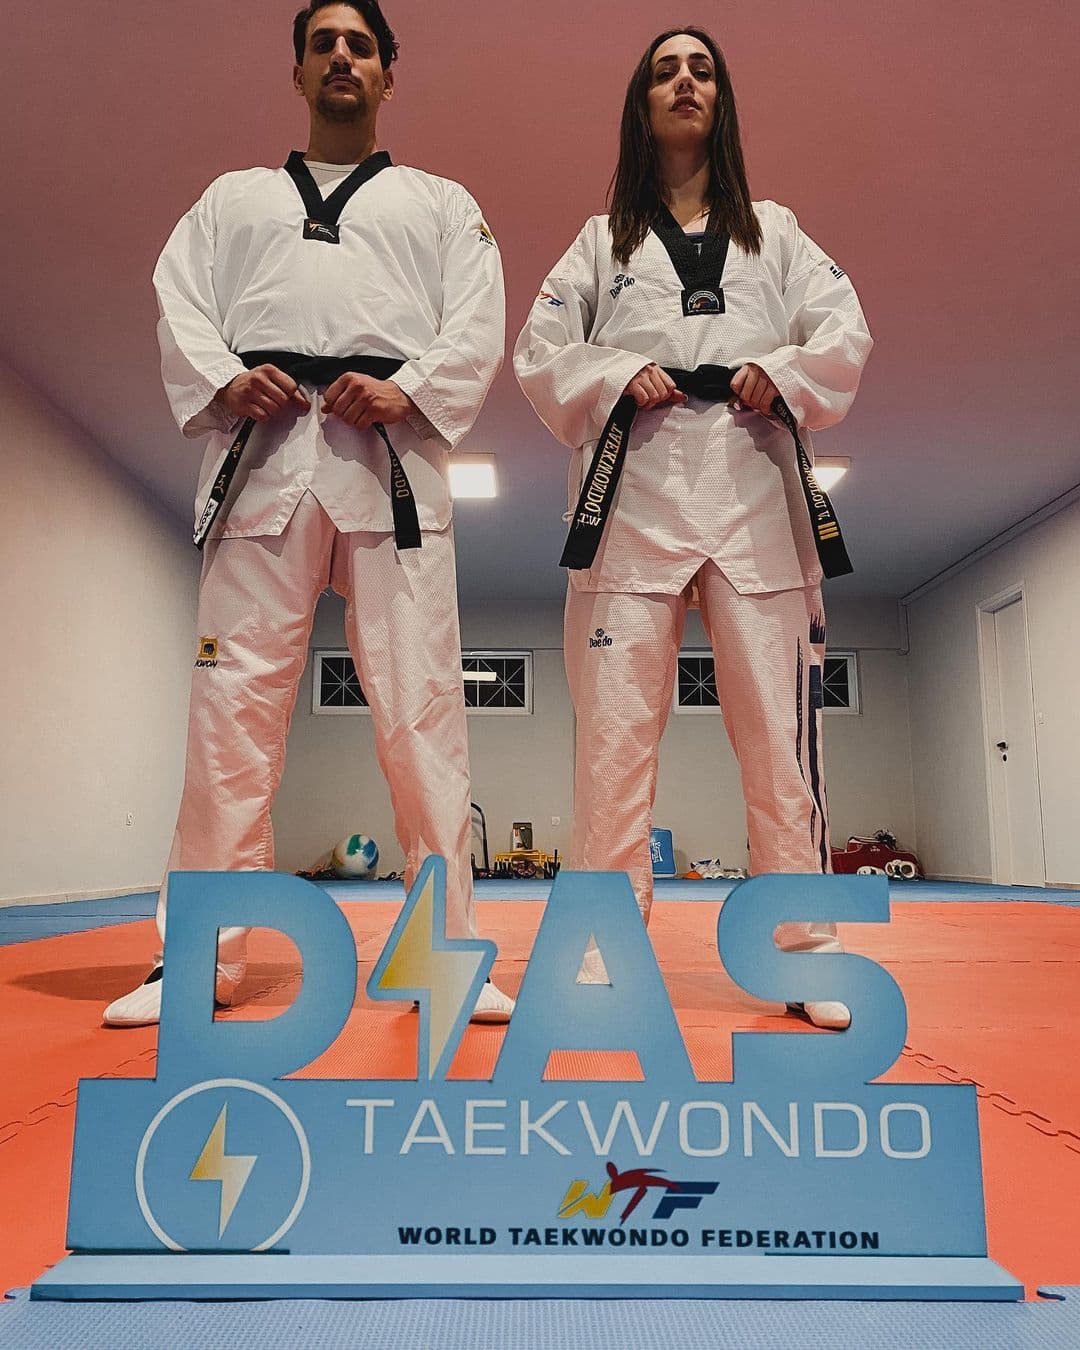 dias-athletic-club-kalamata-taekwondo-sportshunter-3